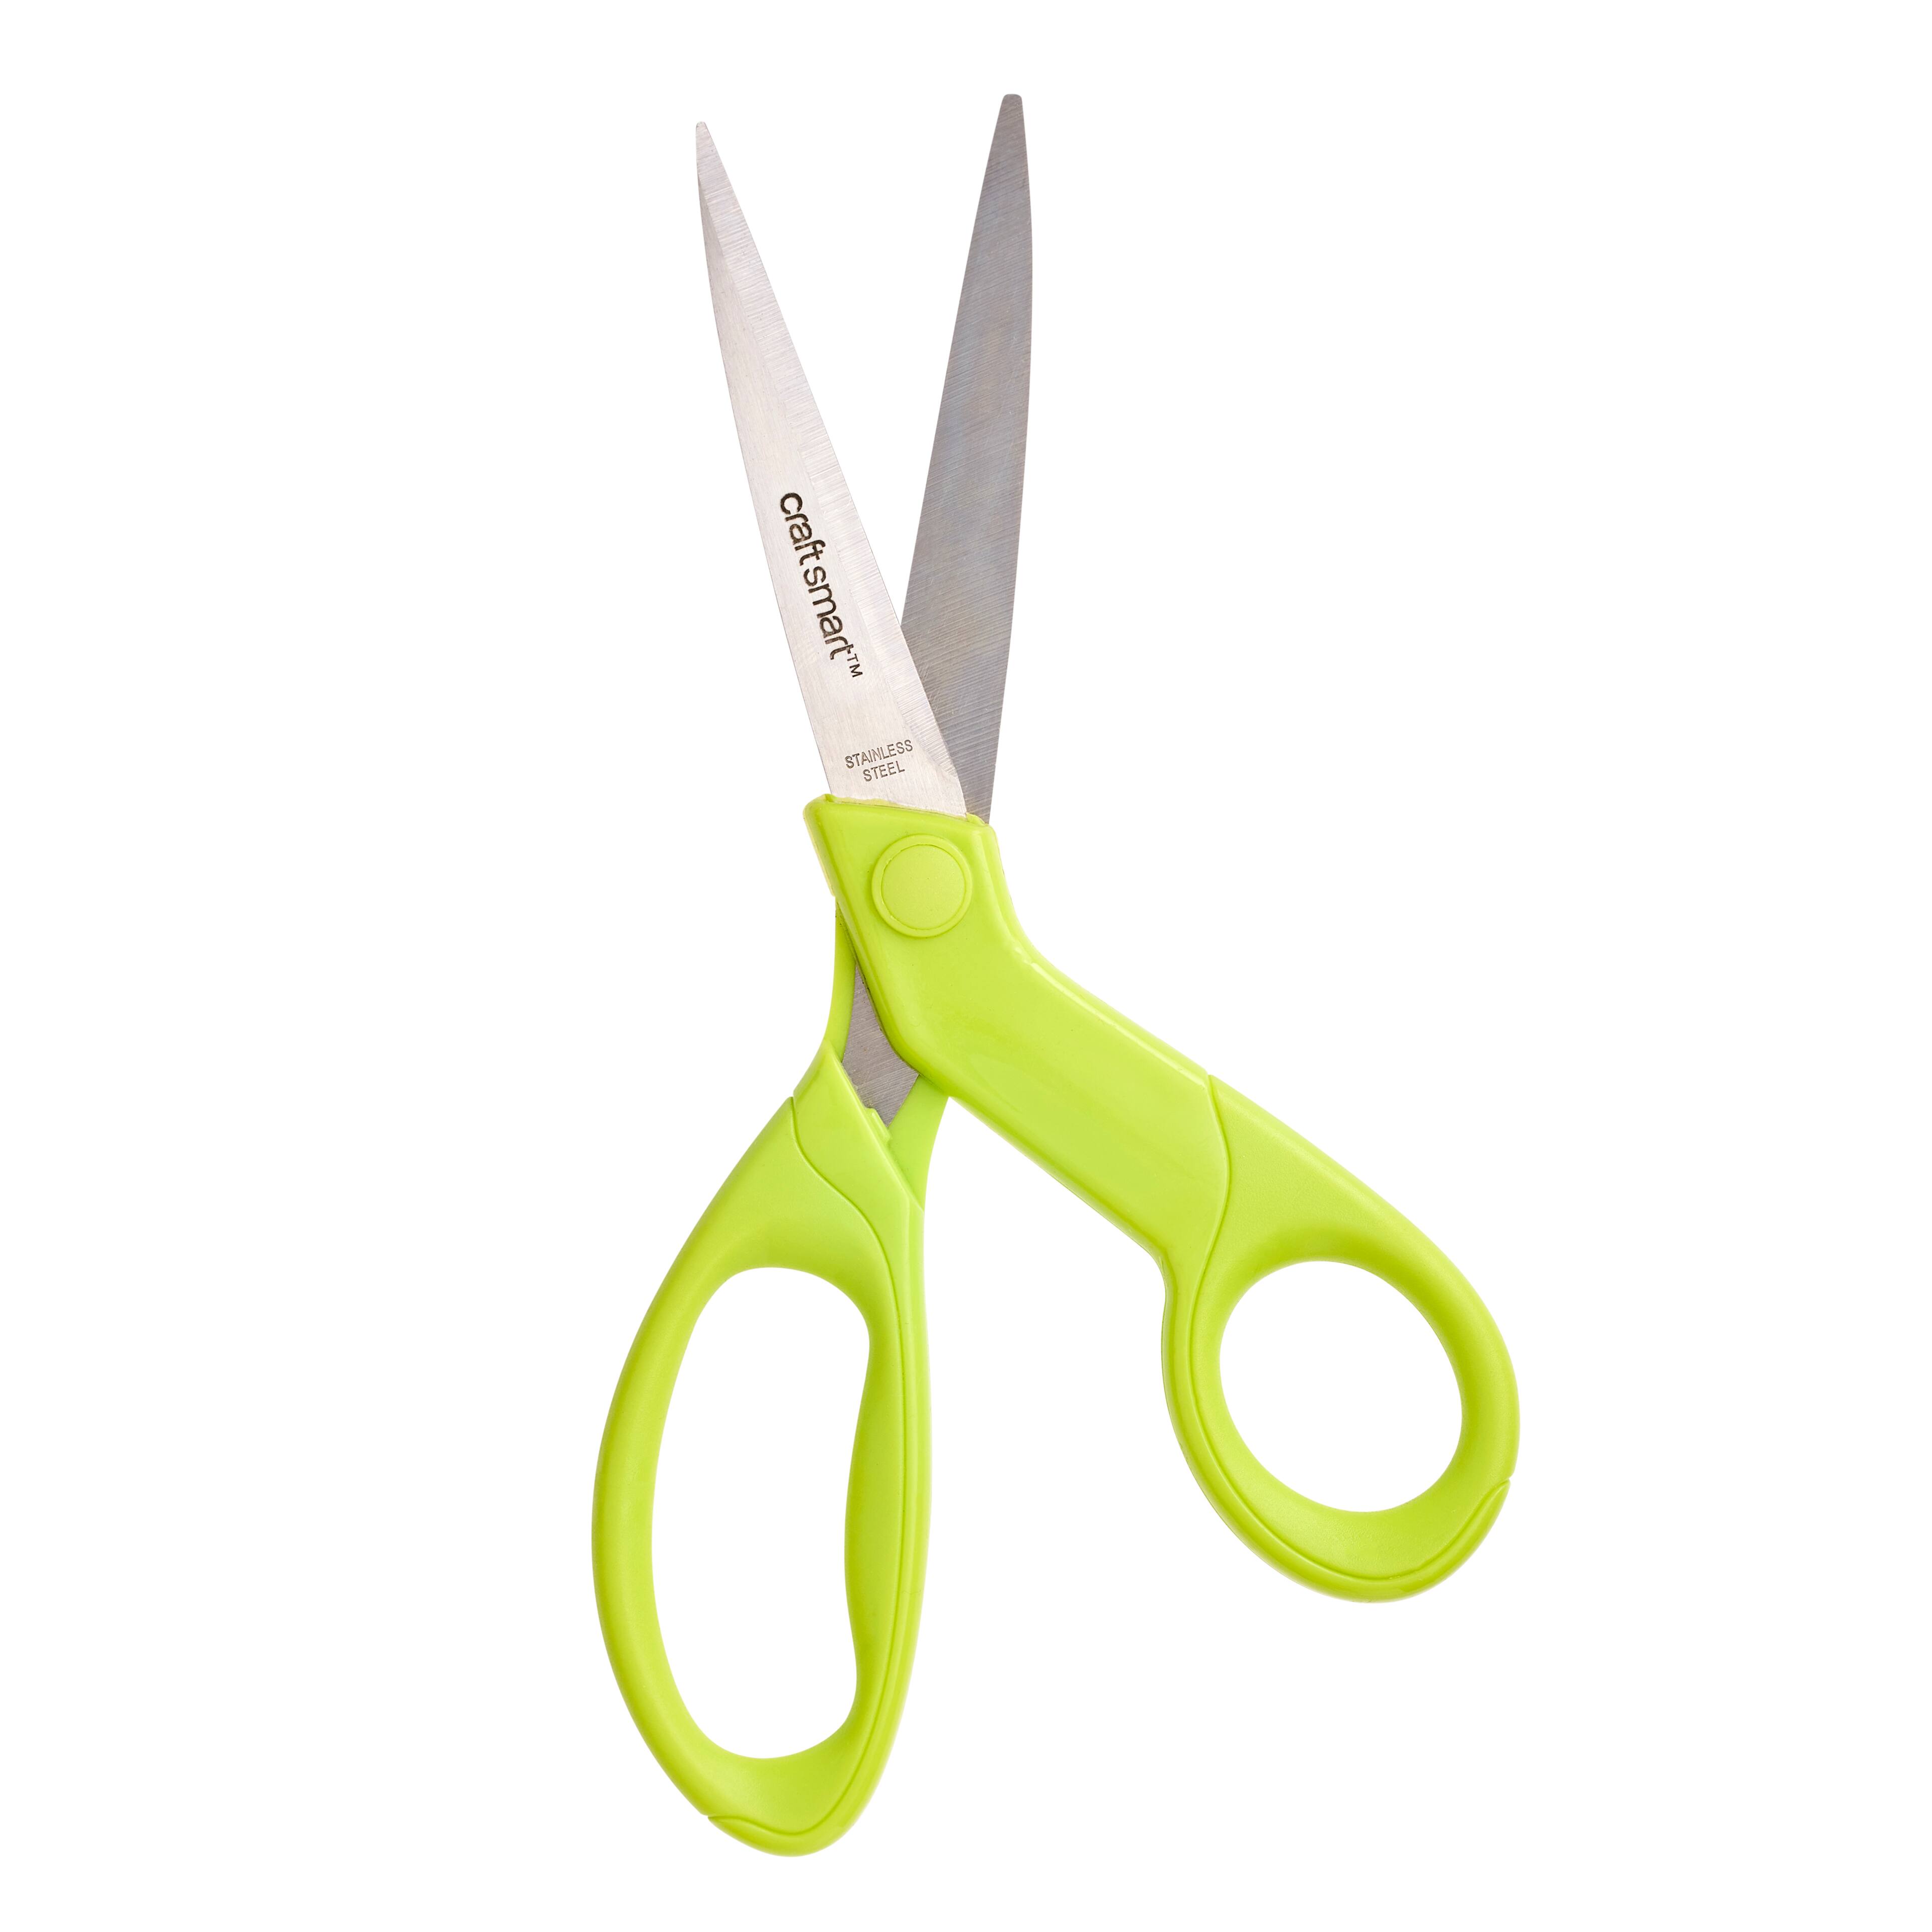 24 Pack: Straight Scissors by Craft Smart&#x2122;